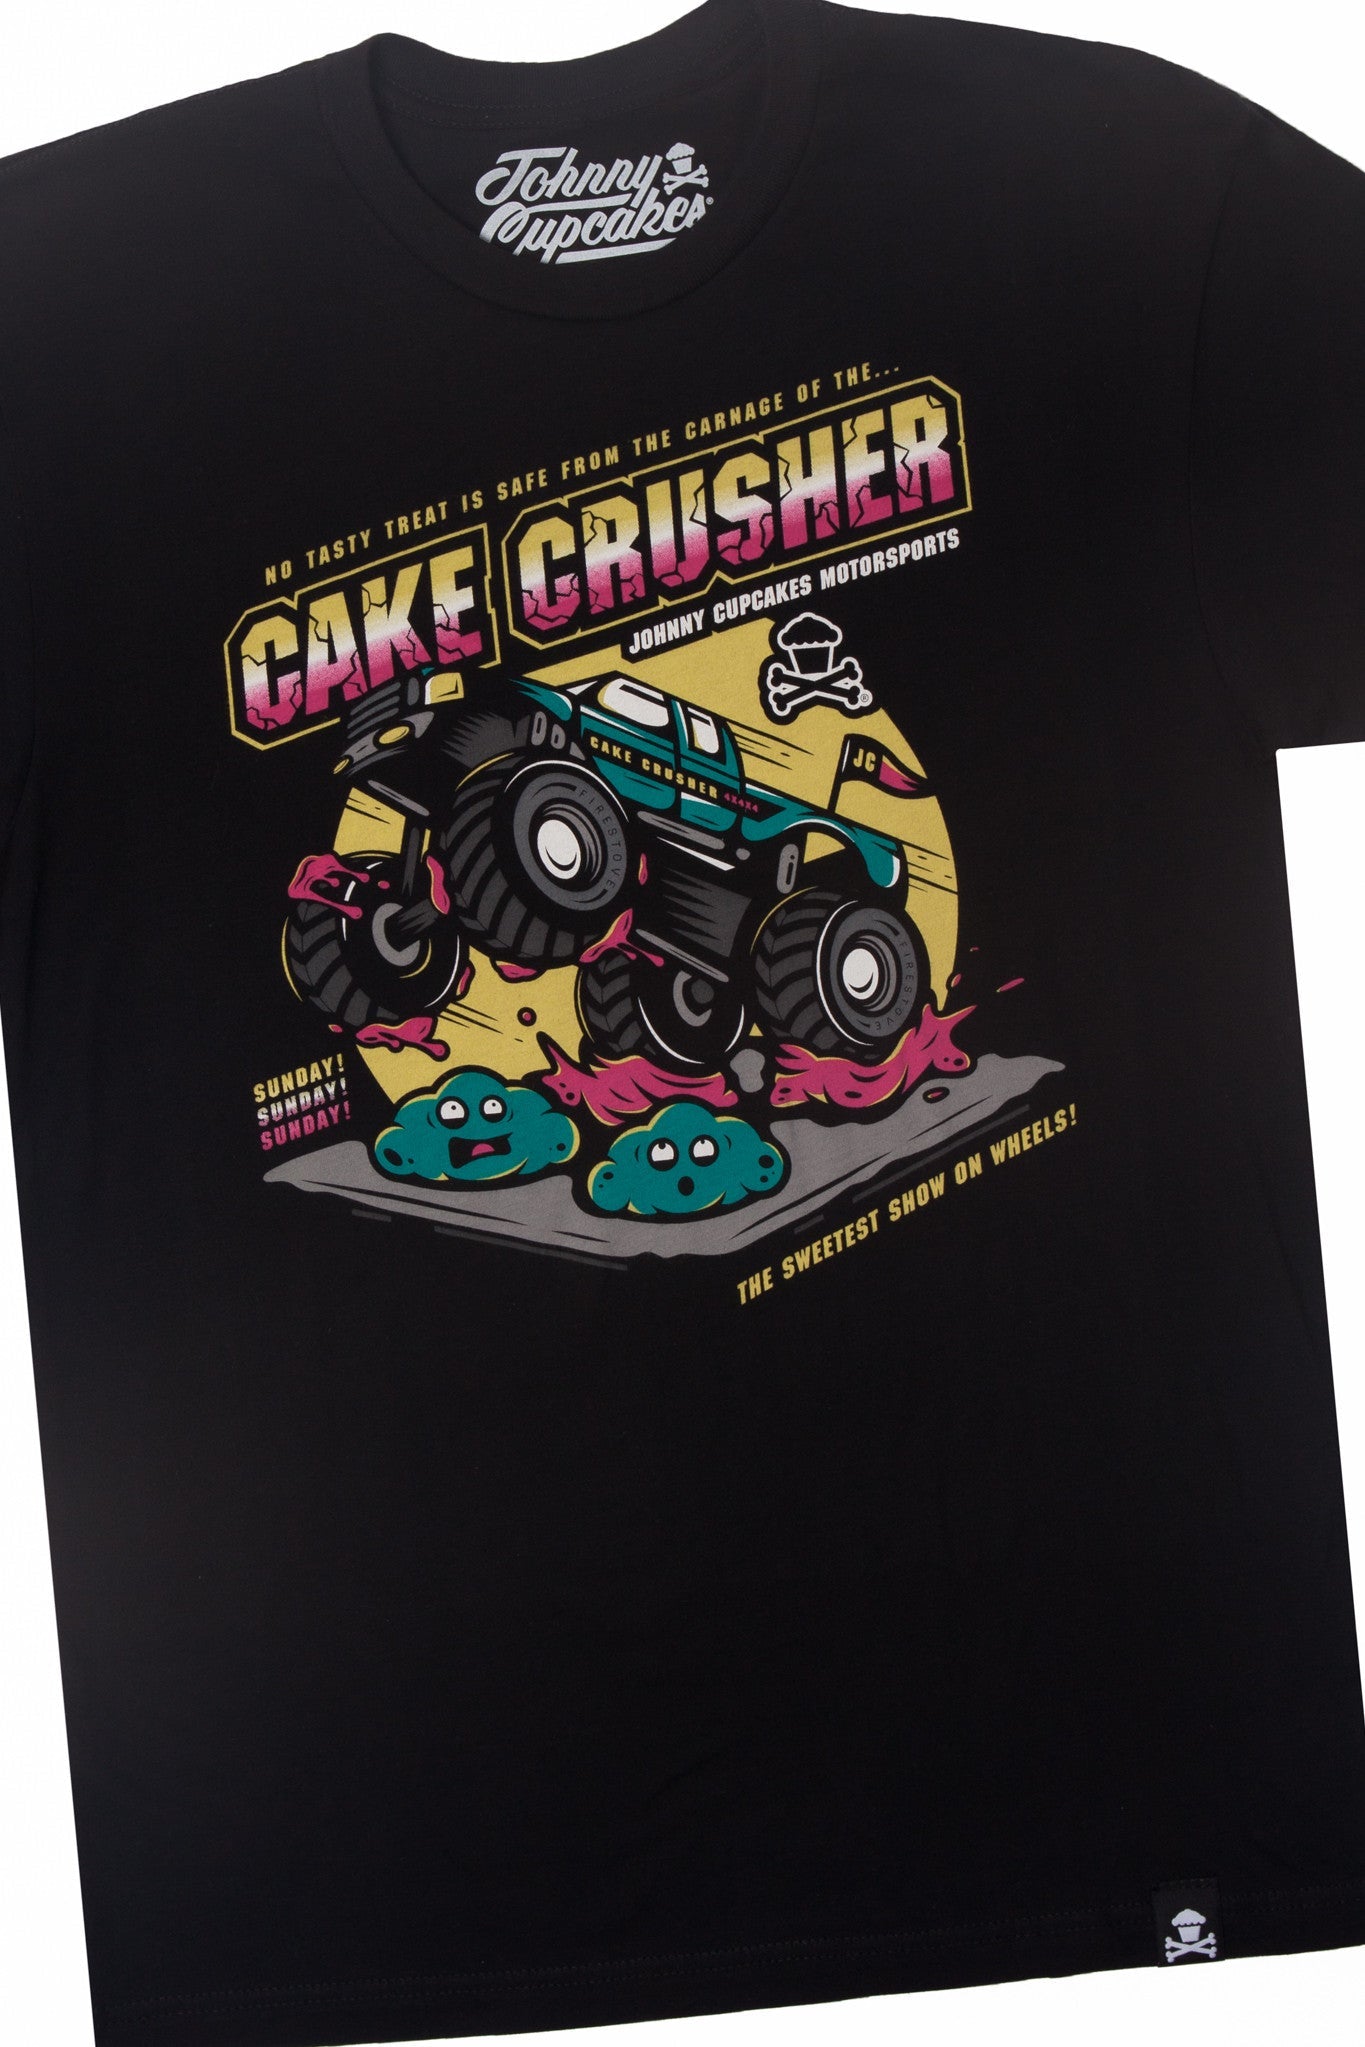 JC Vault - Adult Medium - Cake Crusher